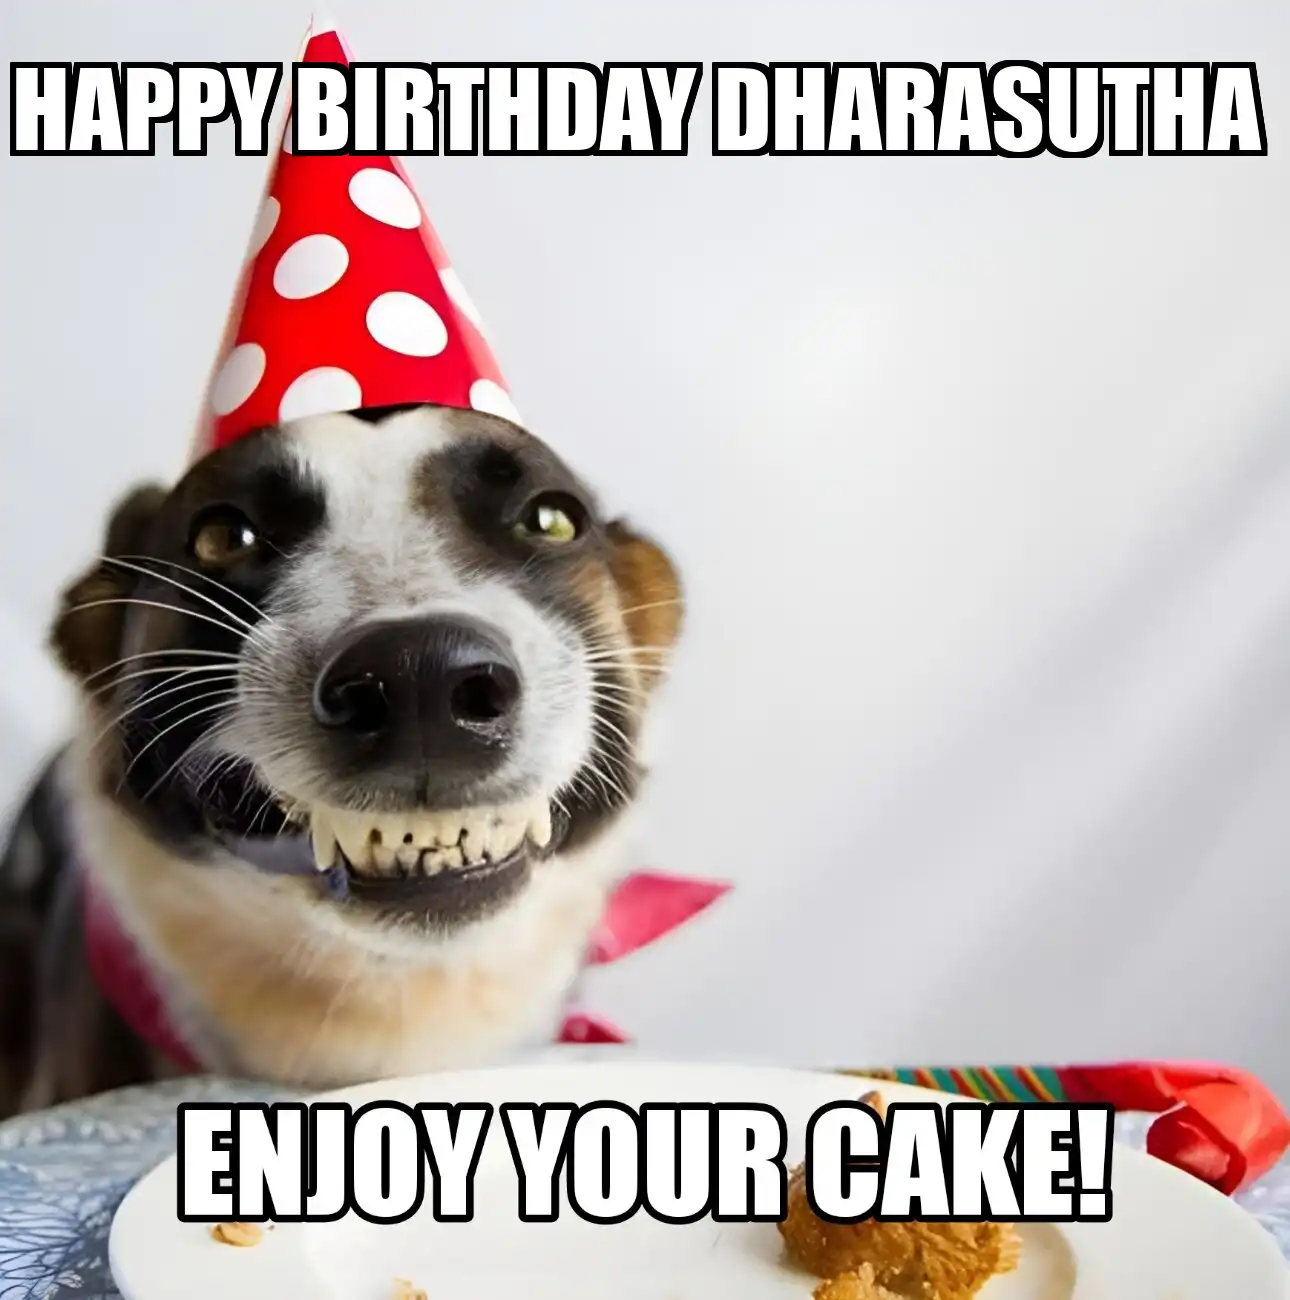 Happy Birthday Dharasutha Enjoy Your Cake Dog Meme